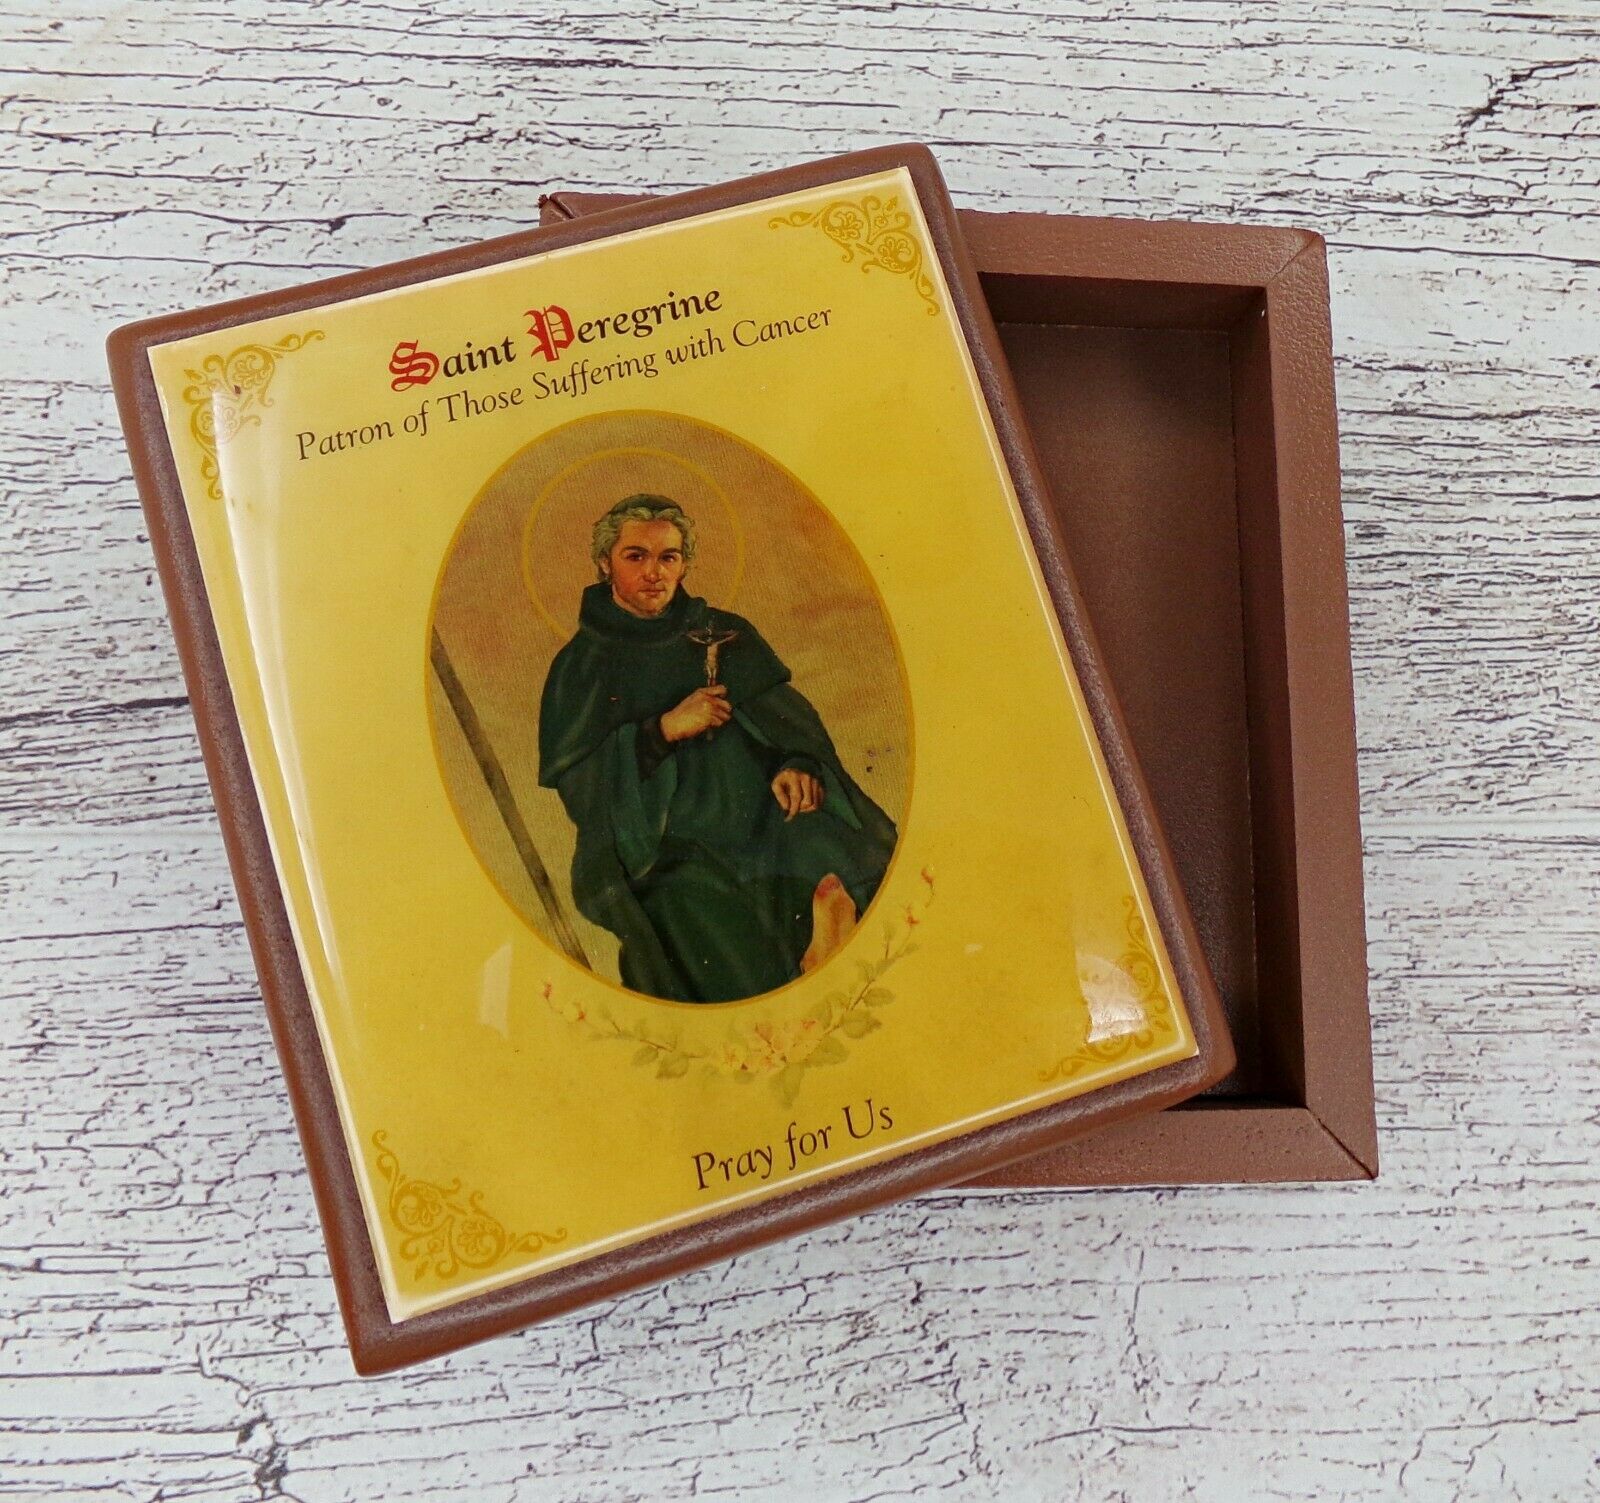 Discontinued Sale Patron Saint Peregrine Wooden Rosary Box Keepsake, 5 In